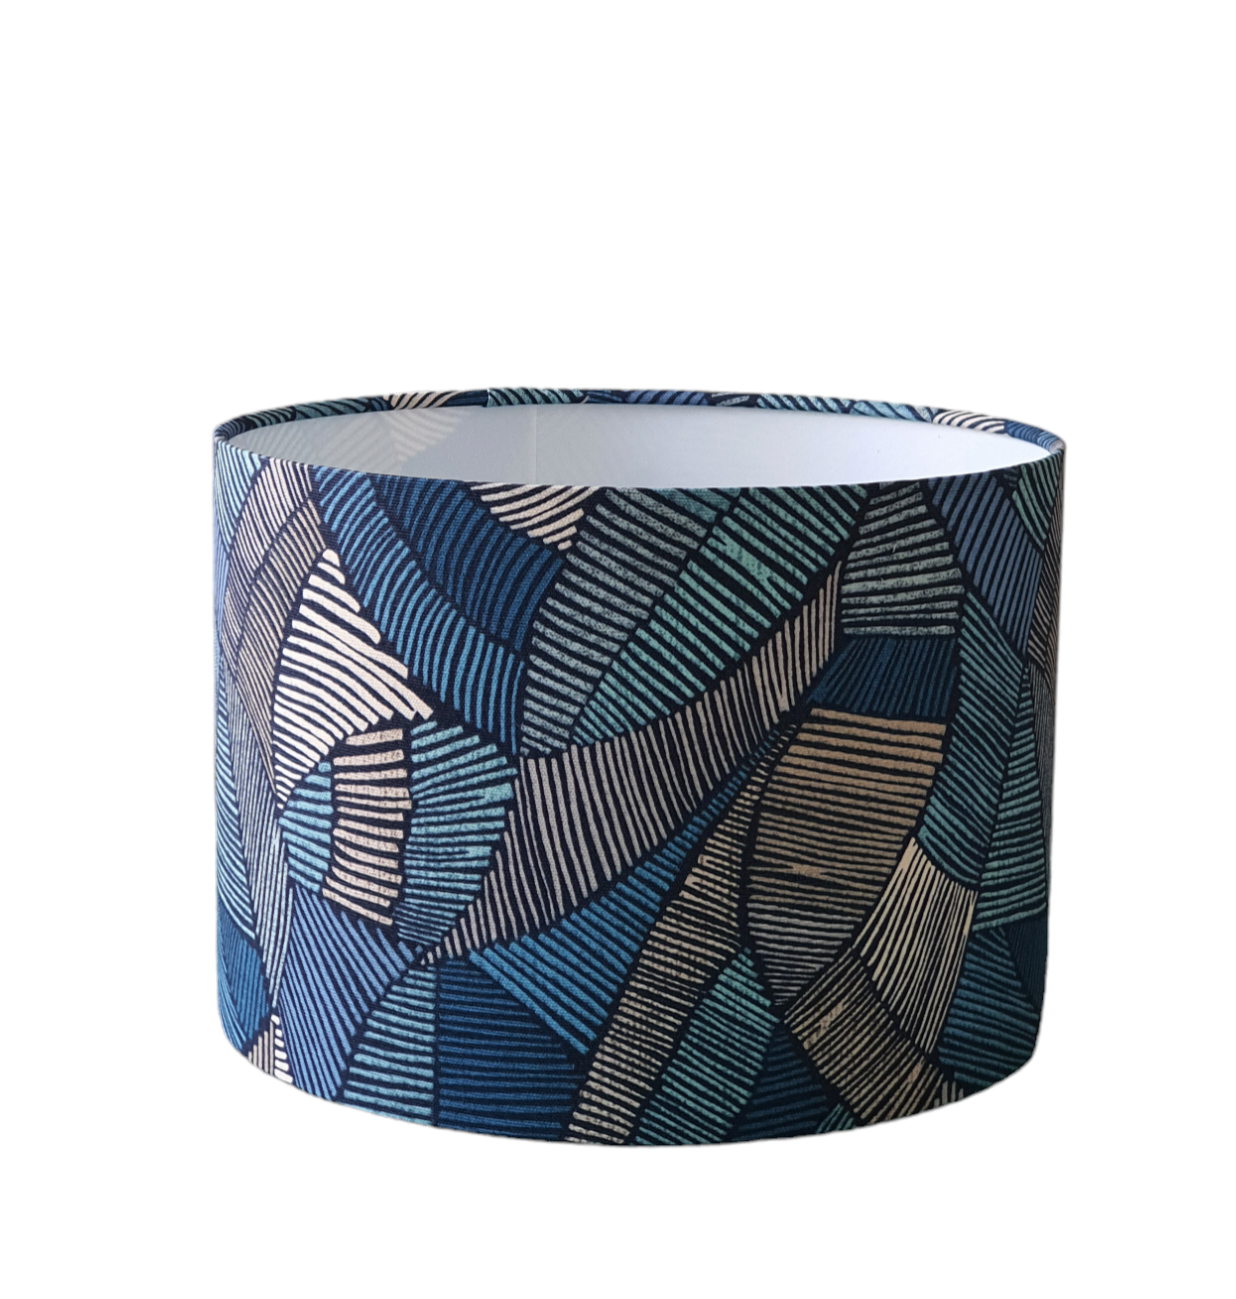 Handmade 30cm Drum Shade - Blue iLiv Definity Riviera Fabric